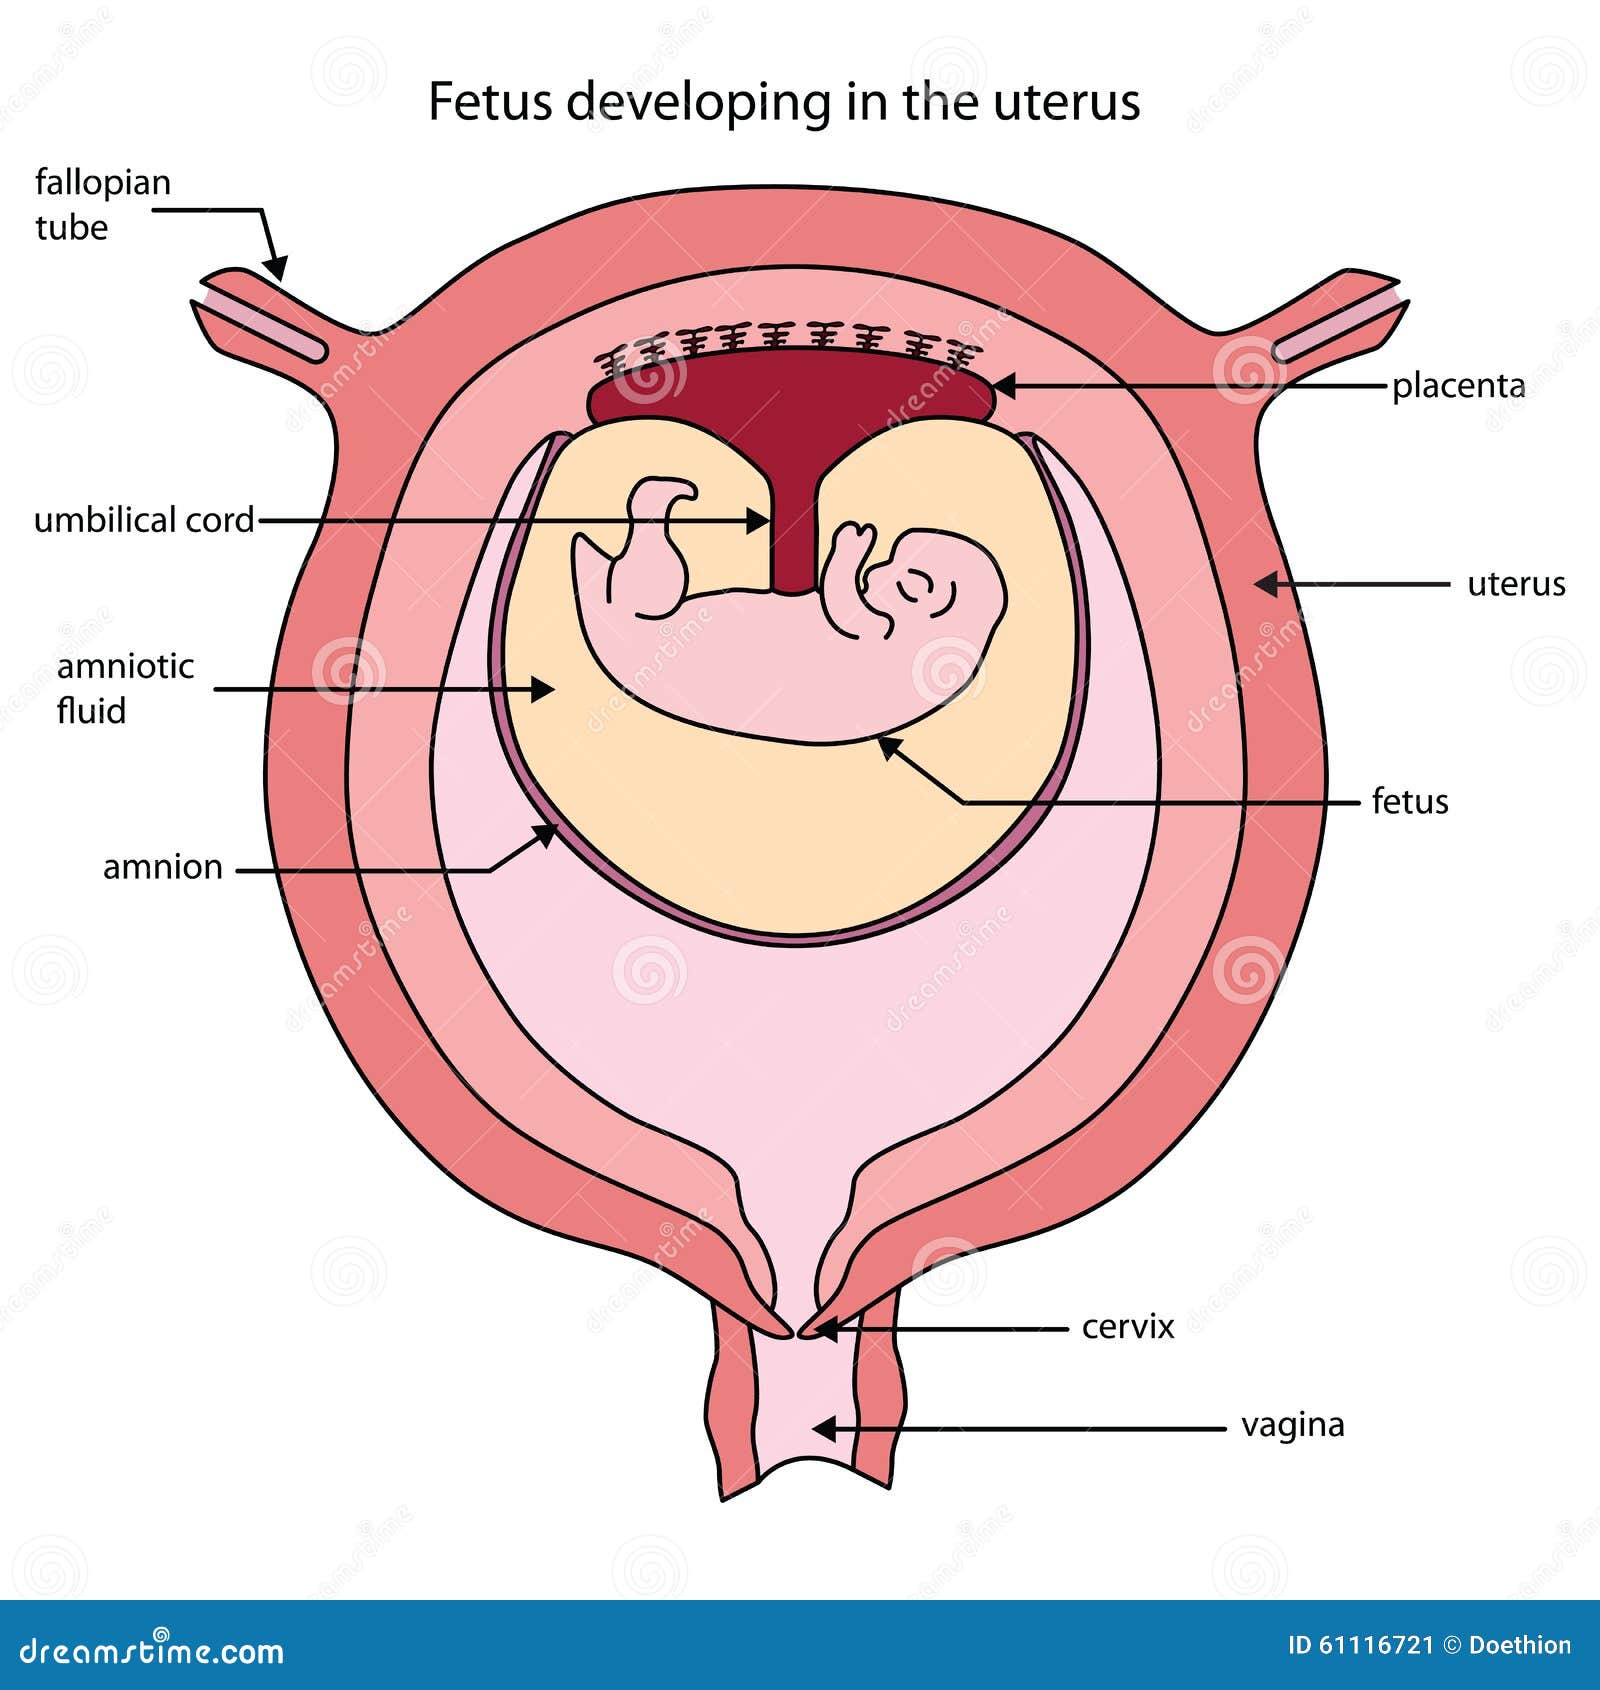 presentation of baby in uterus